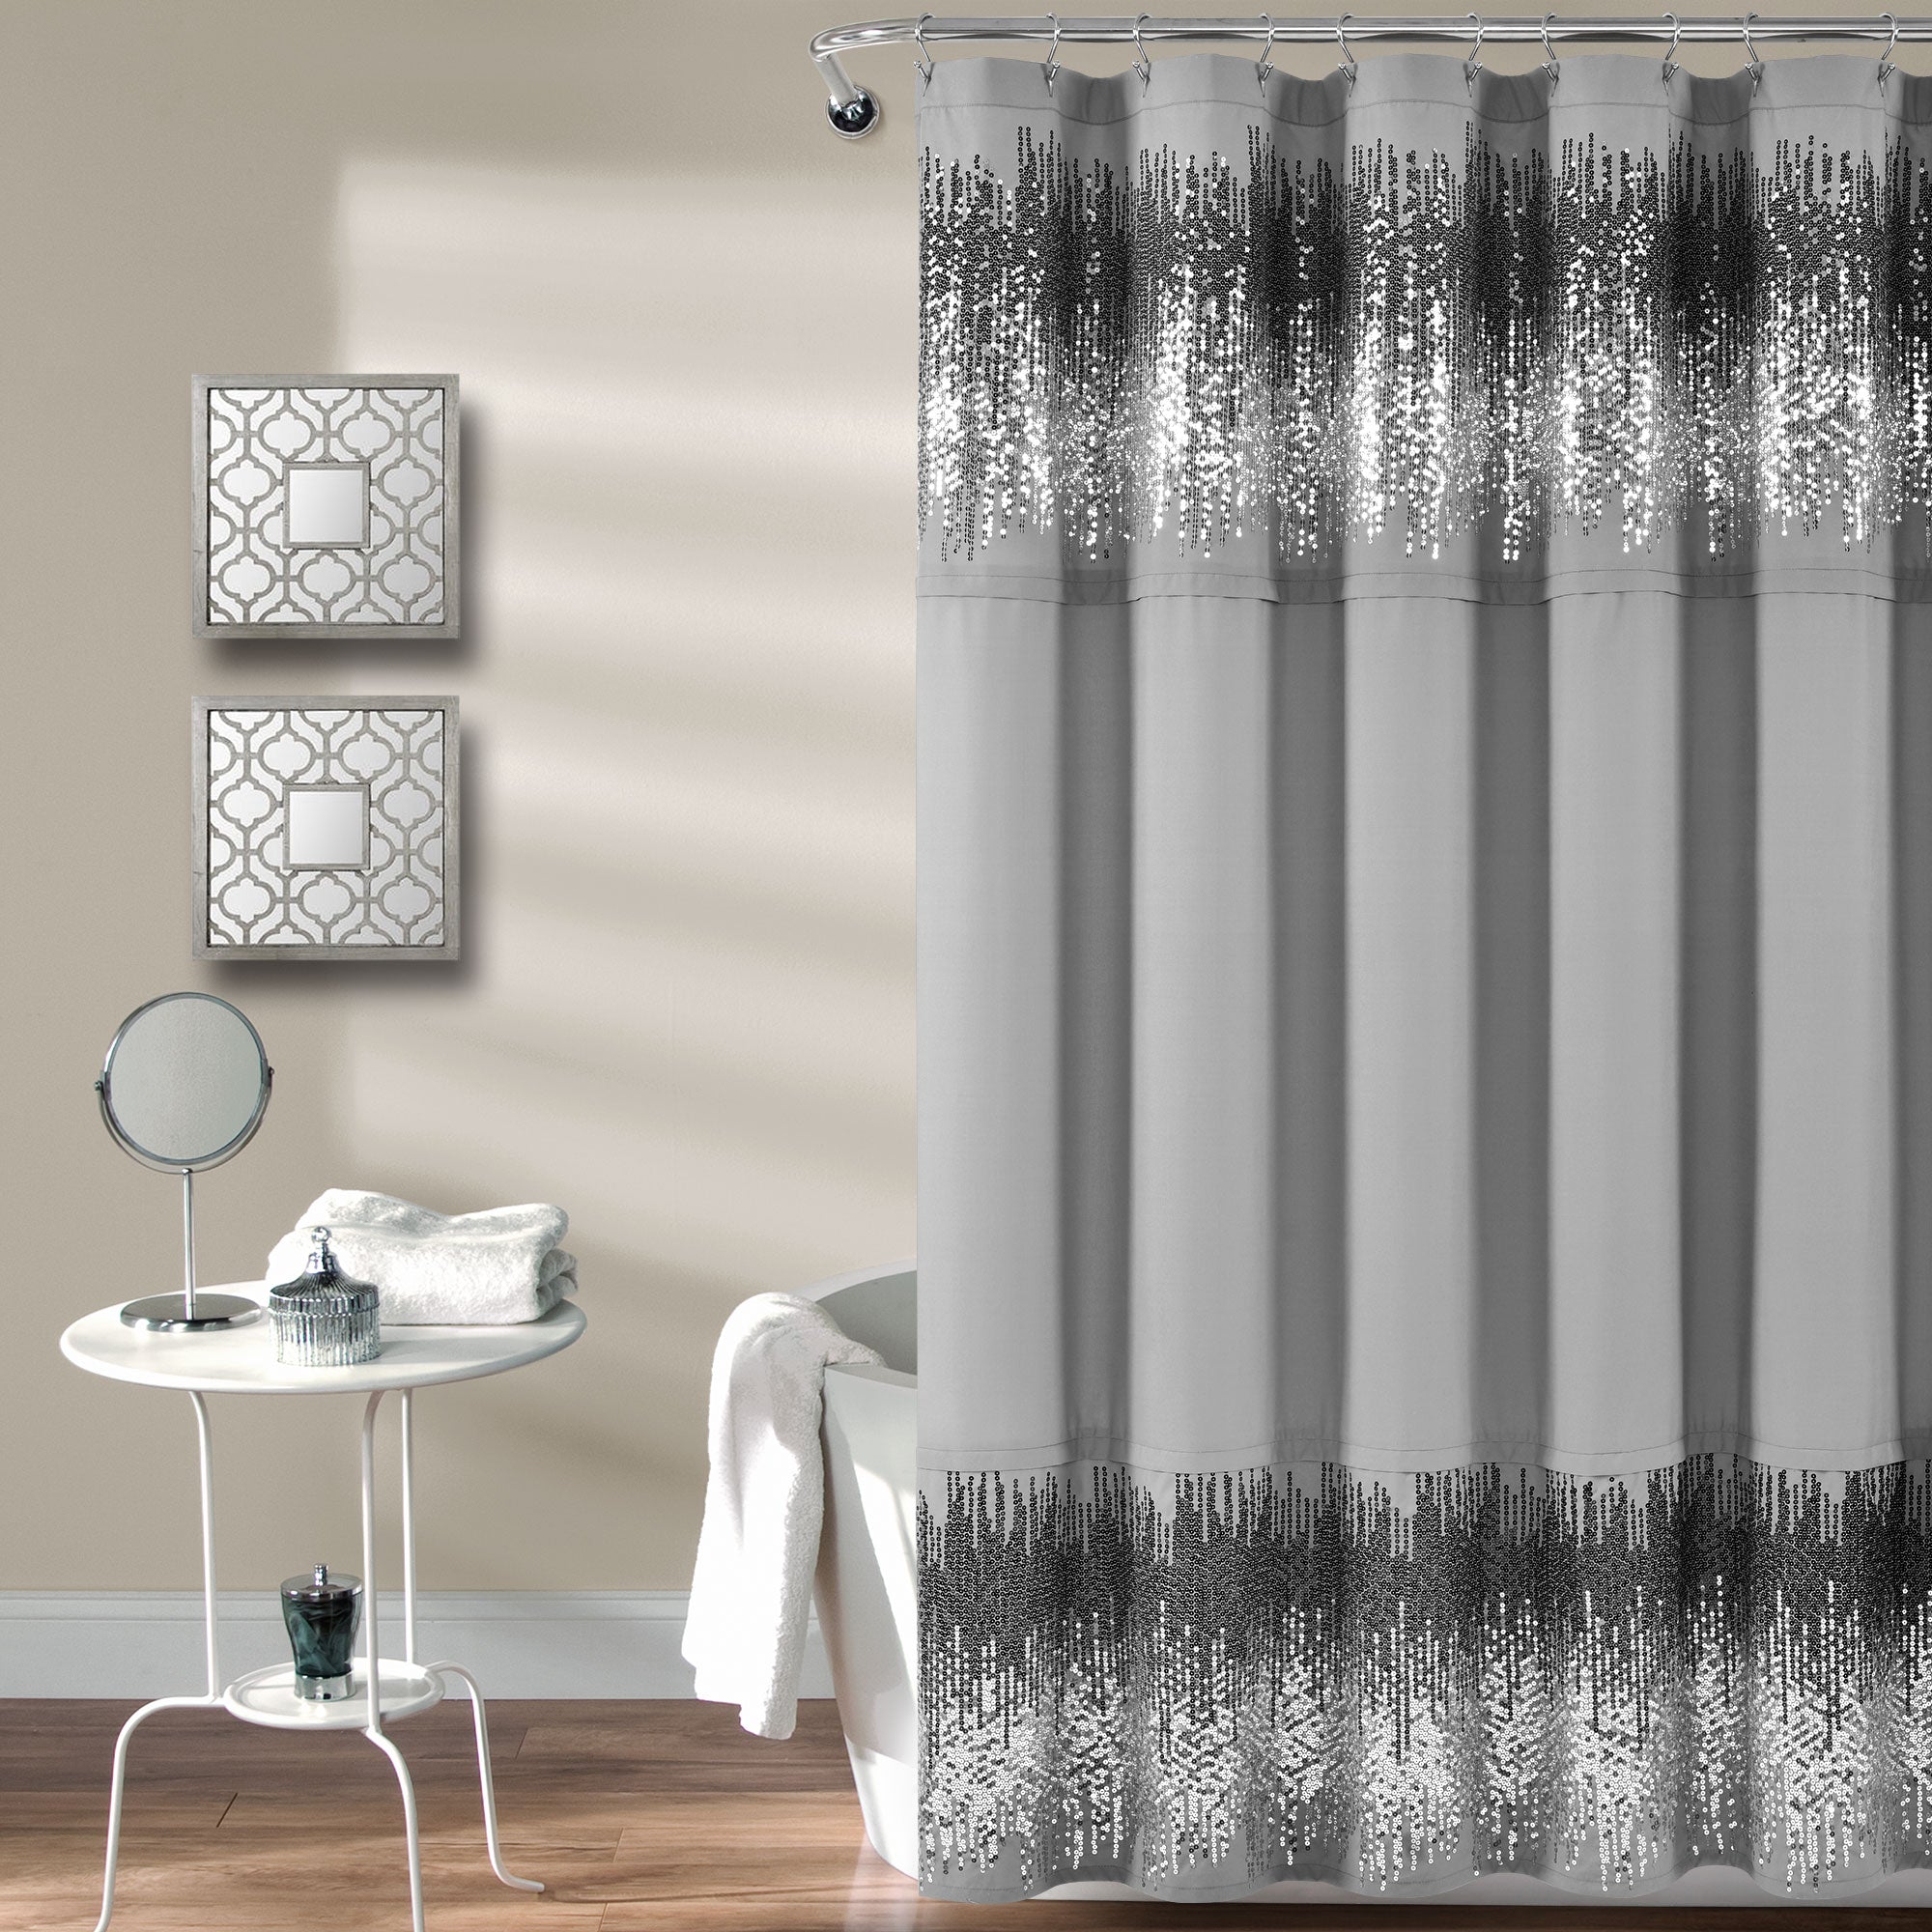 Modern Shower Curtains: Stylish Designs For Your Bathroom – LushDecor